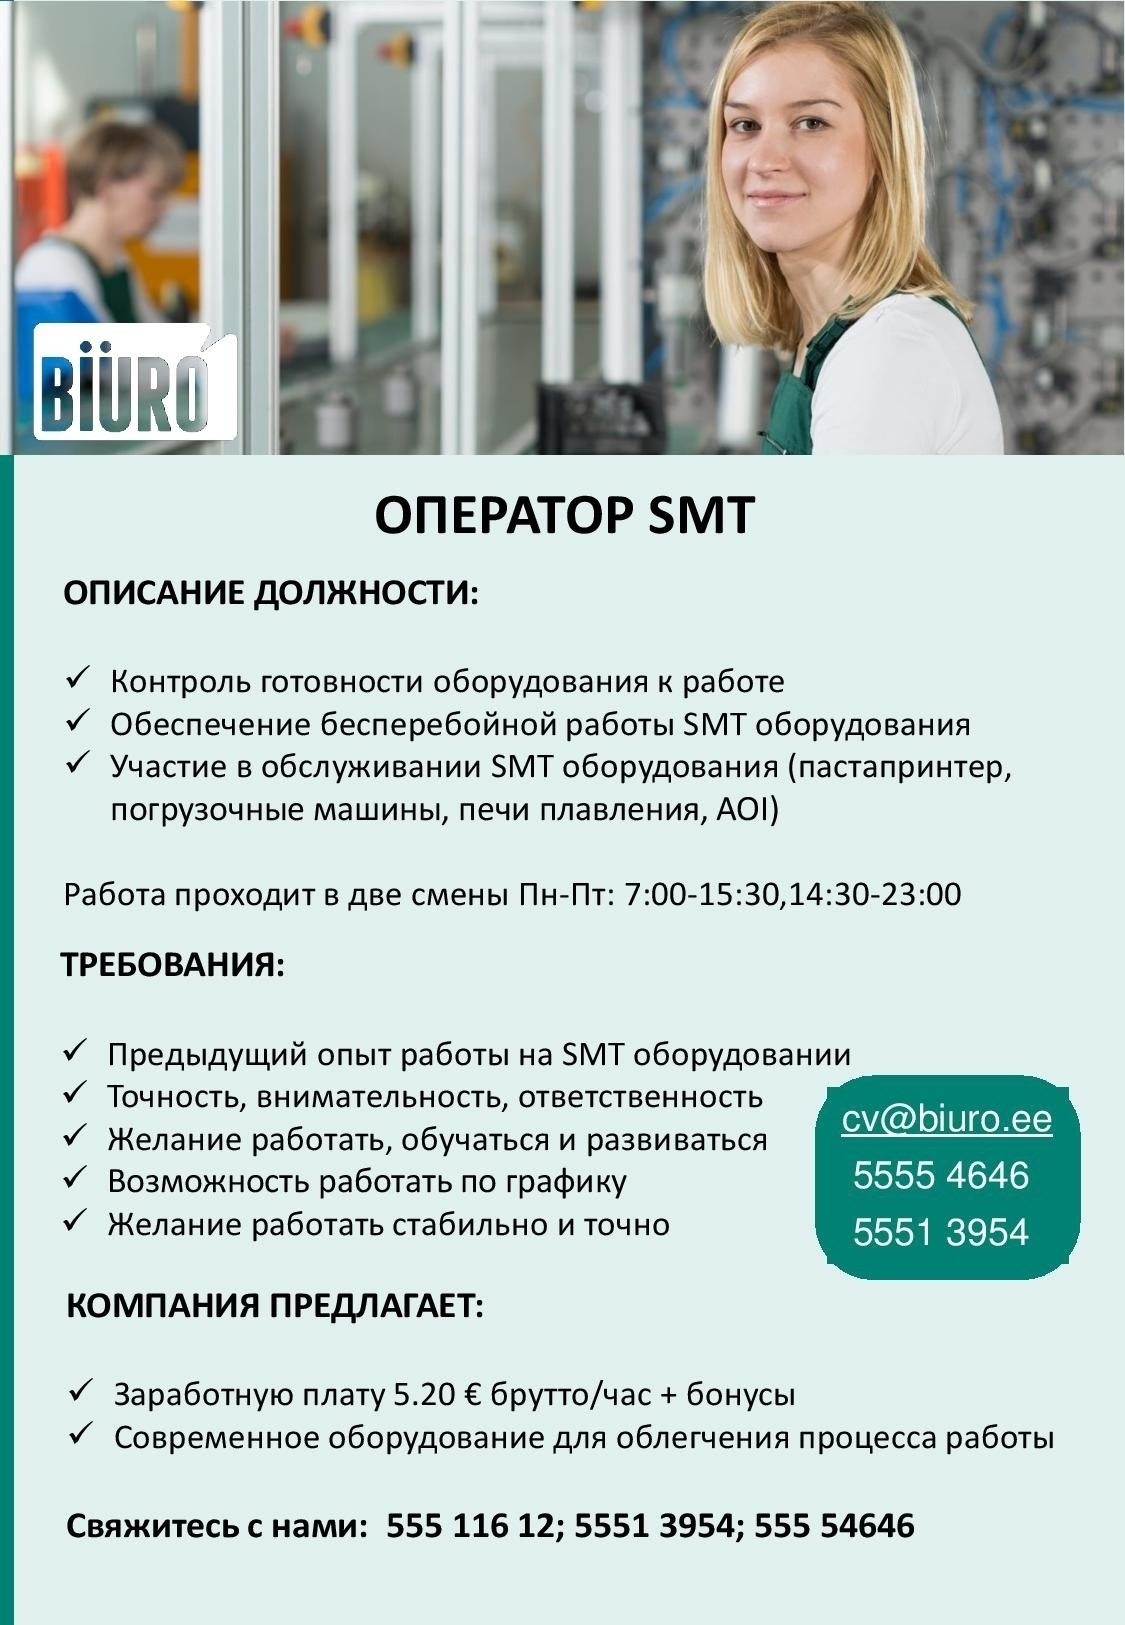 Biuro OÜ Оператор SMT